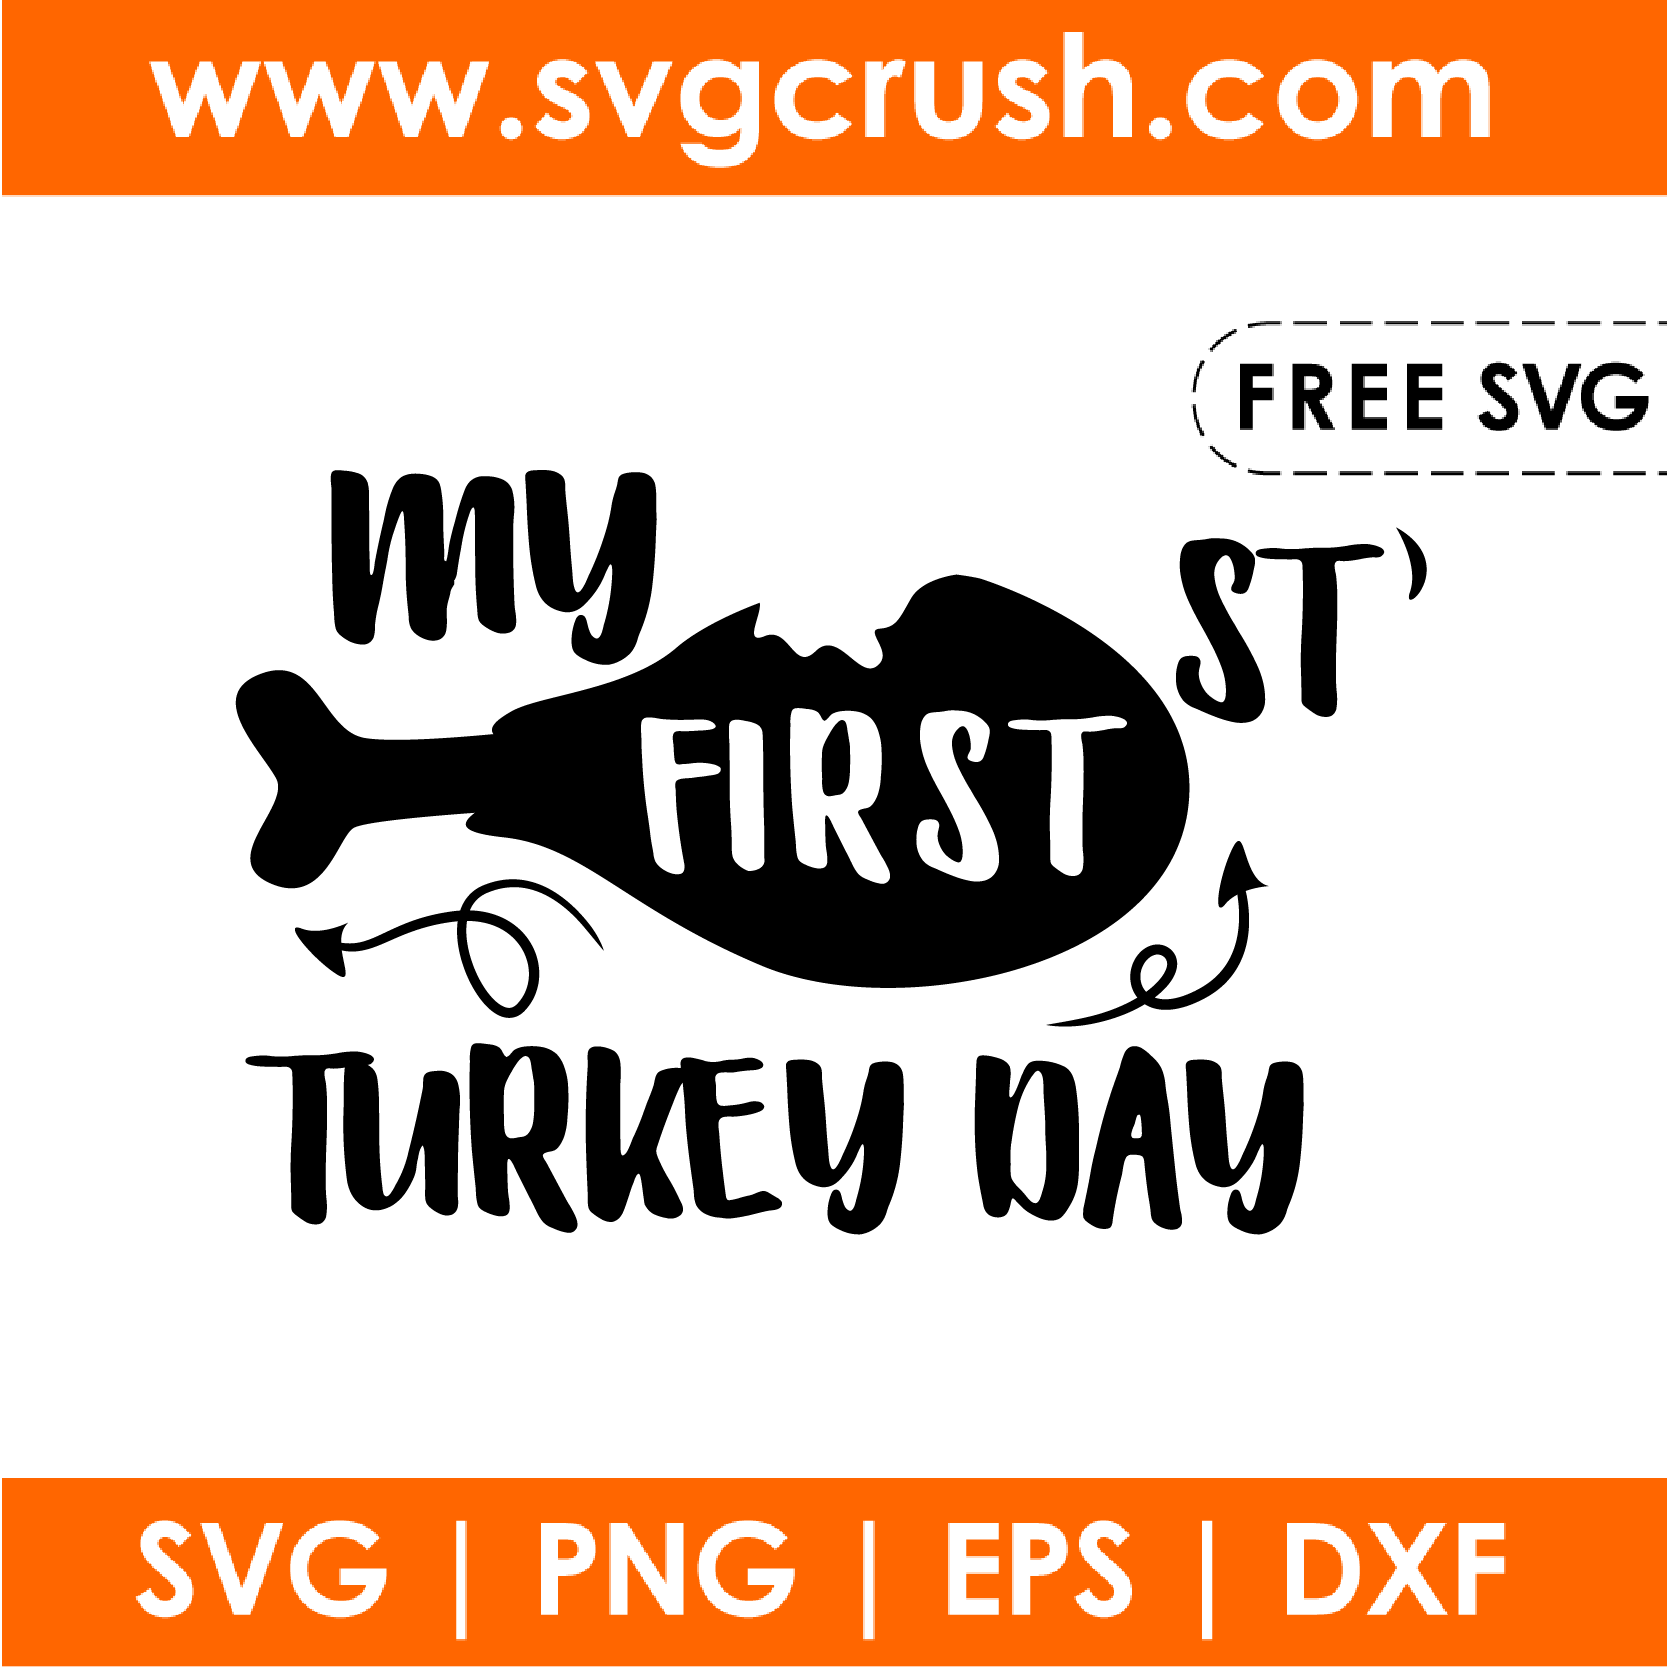 free my-first-turkey-day-002 svg